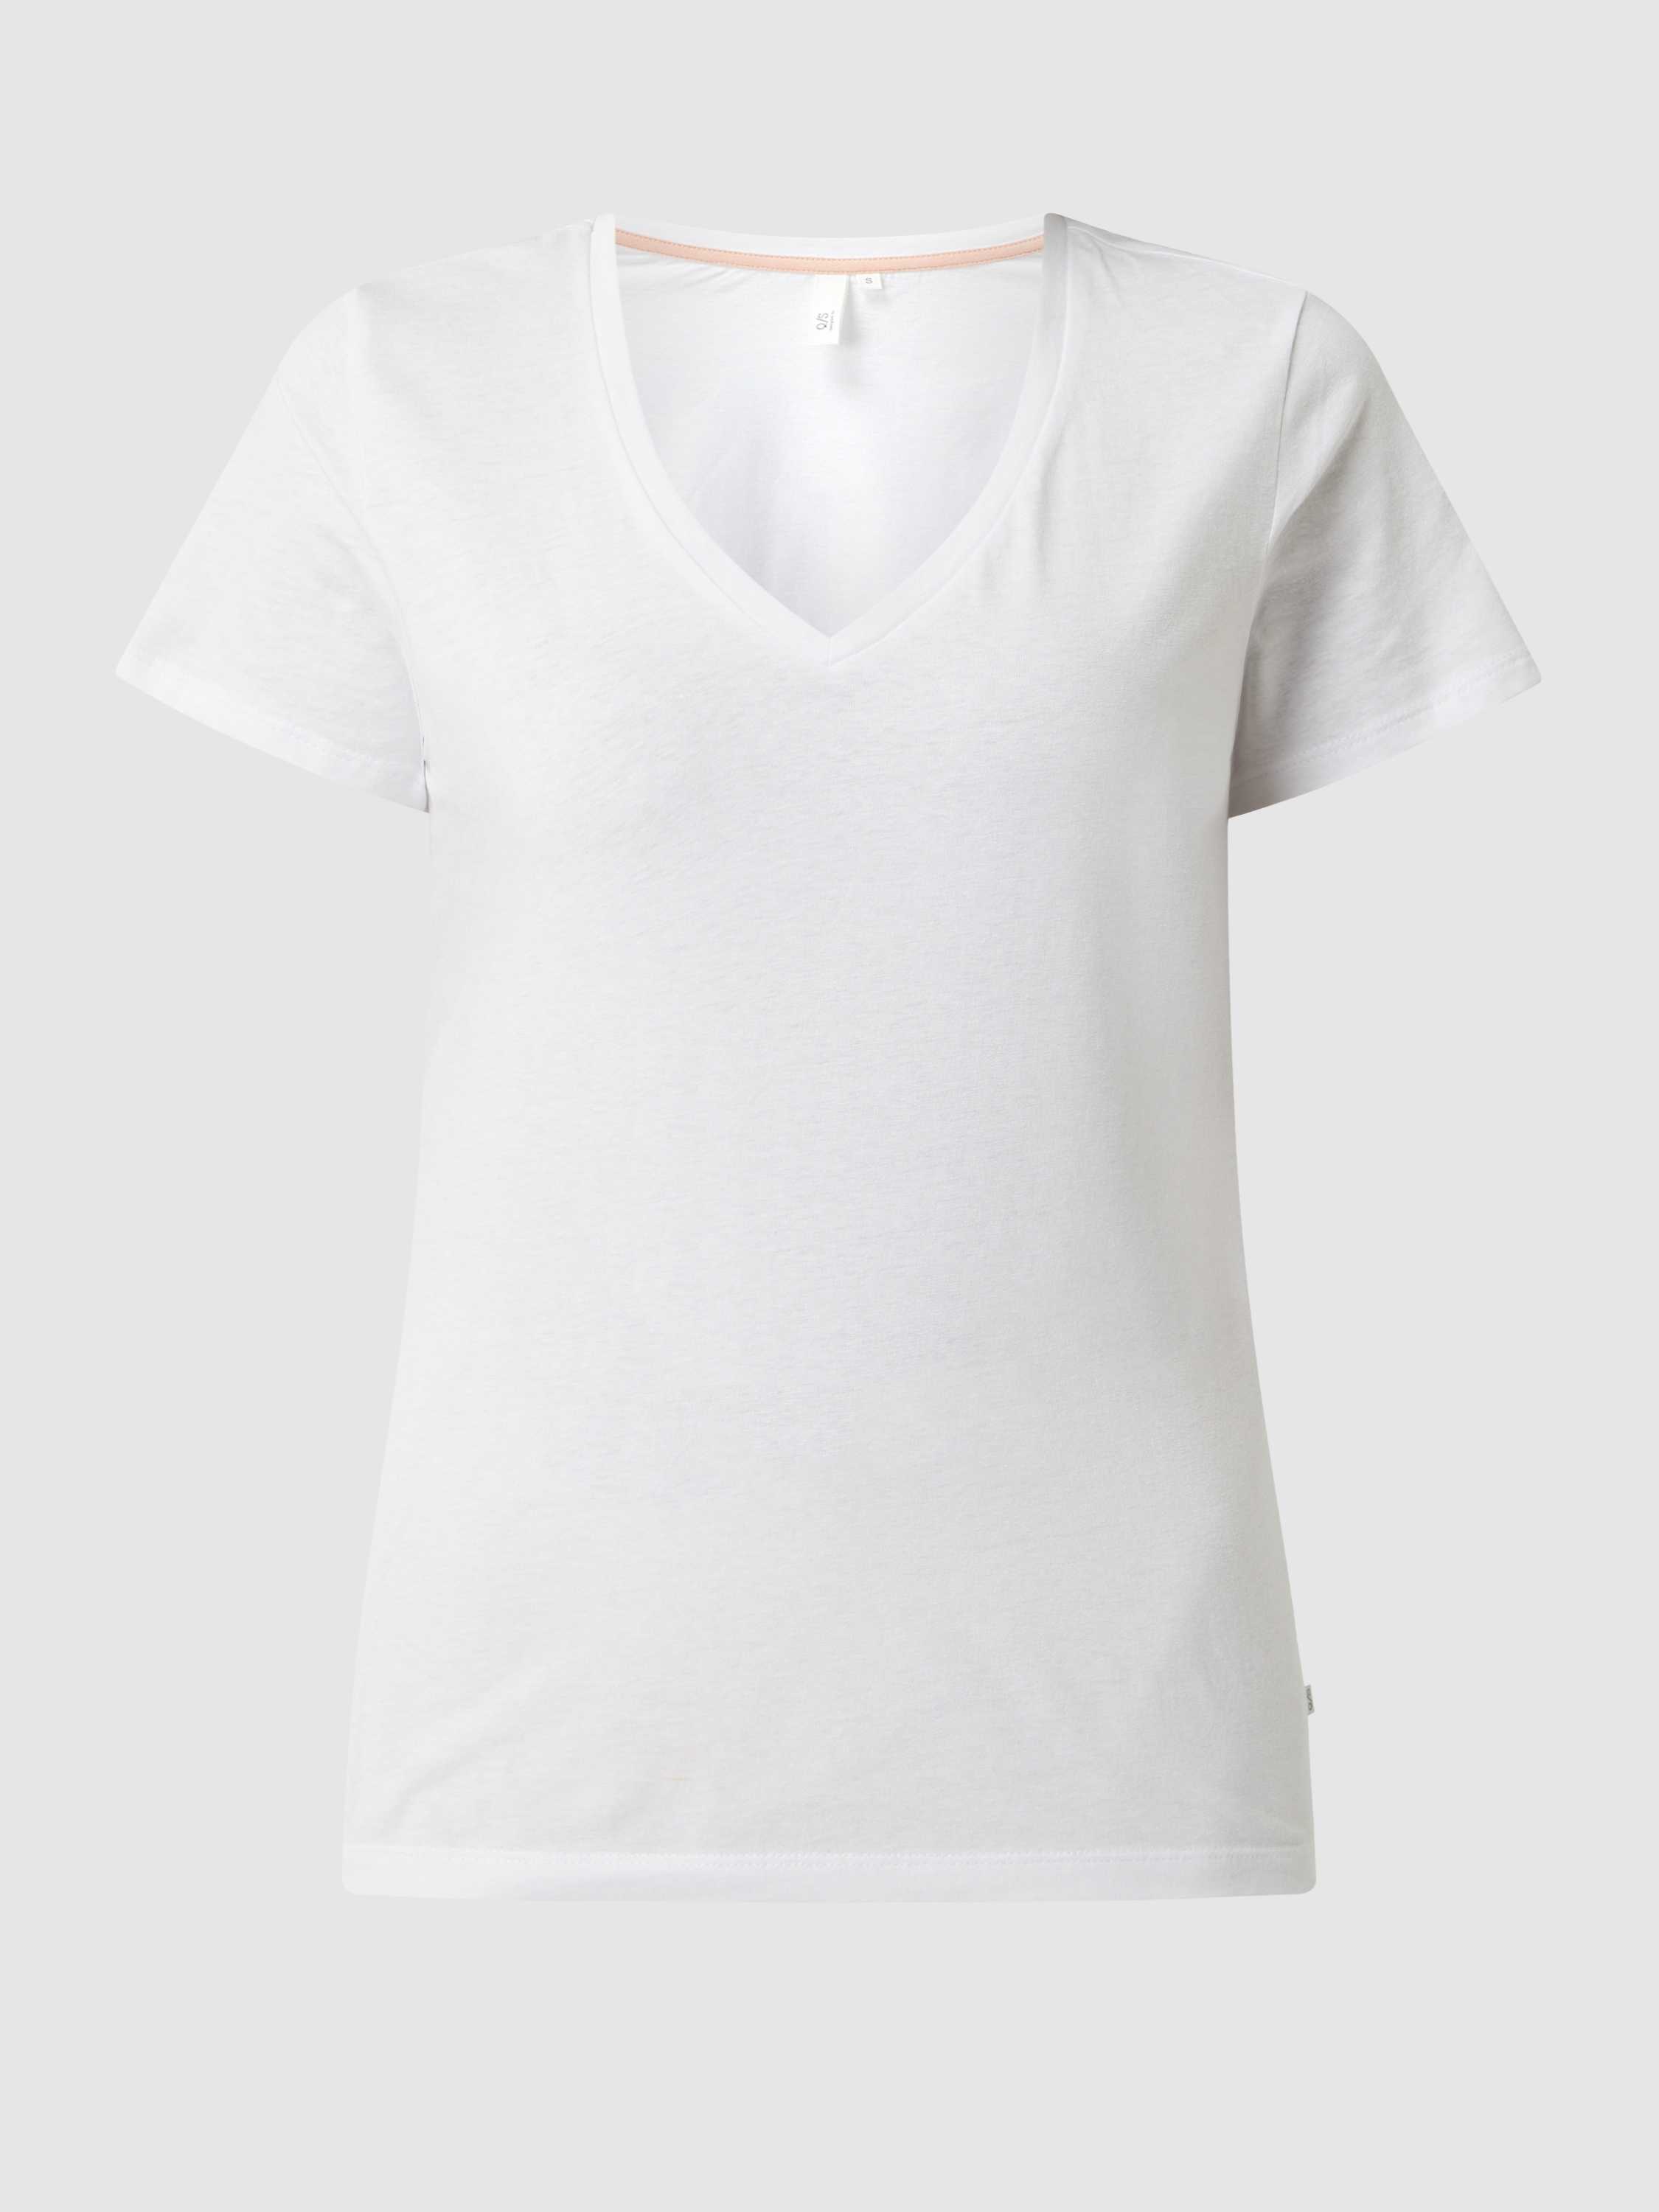 T-Shirt mit Label-Detail Modell 'Basic', Peek & Cloppenburg